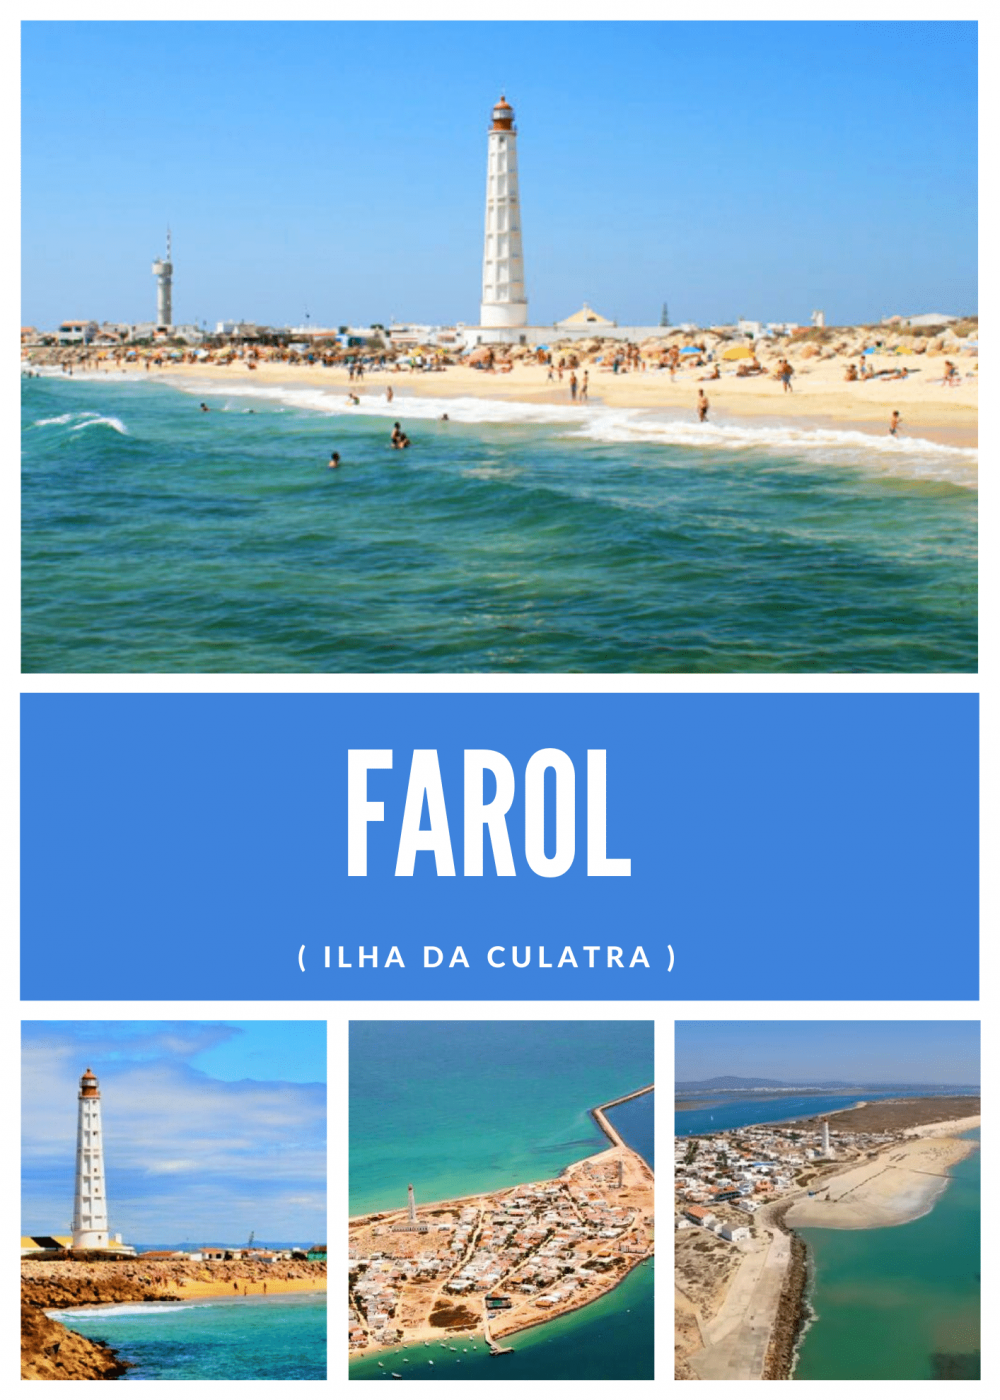 Farol Island